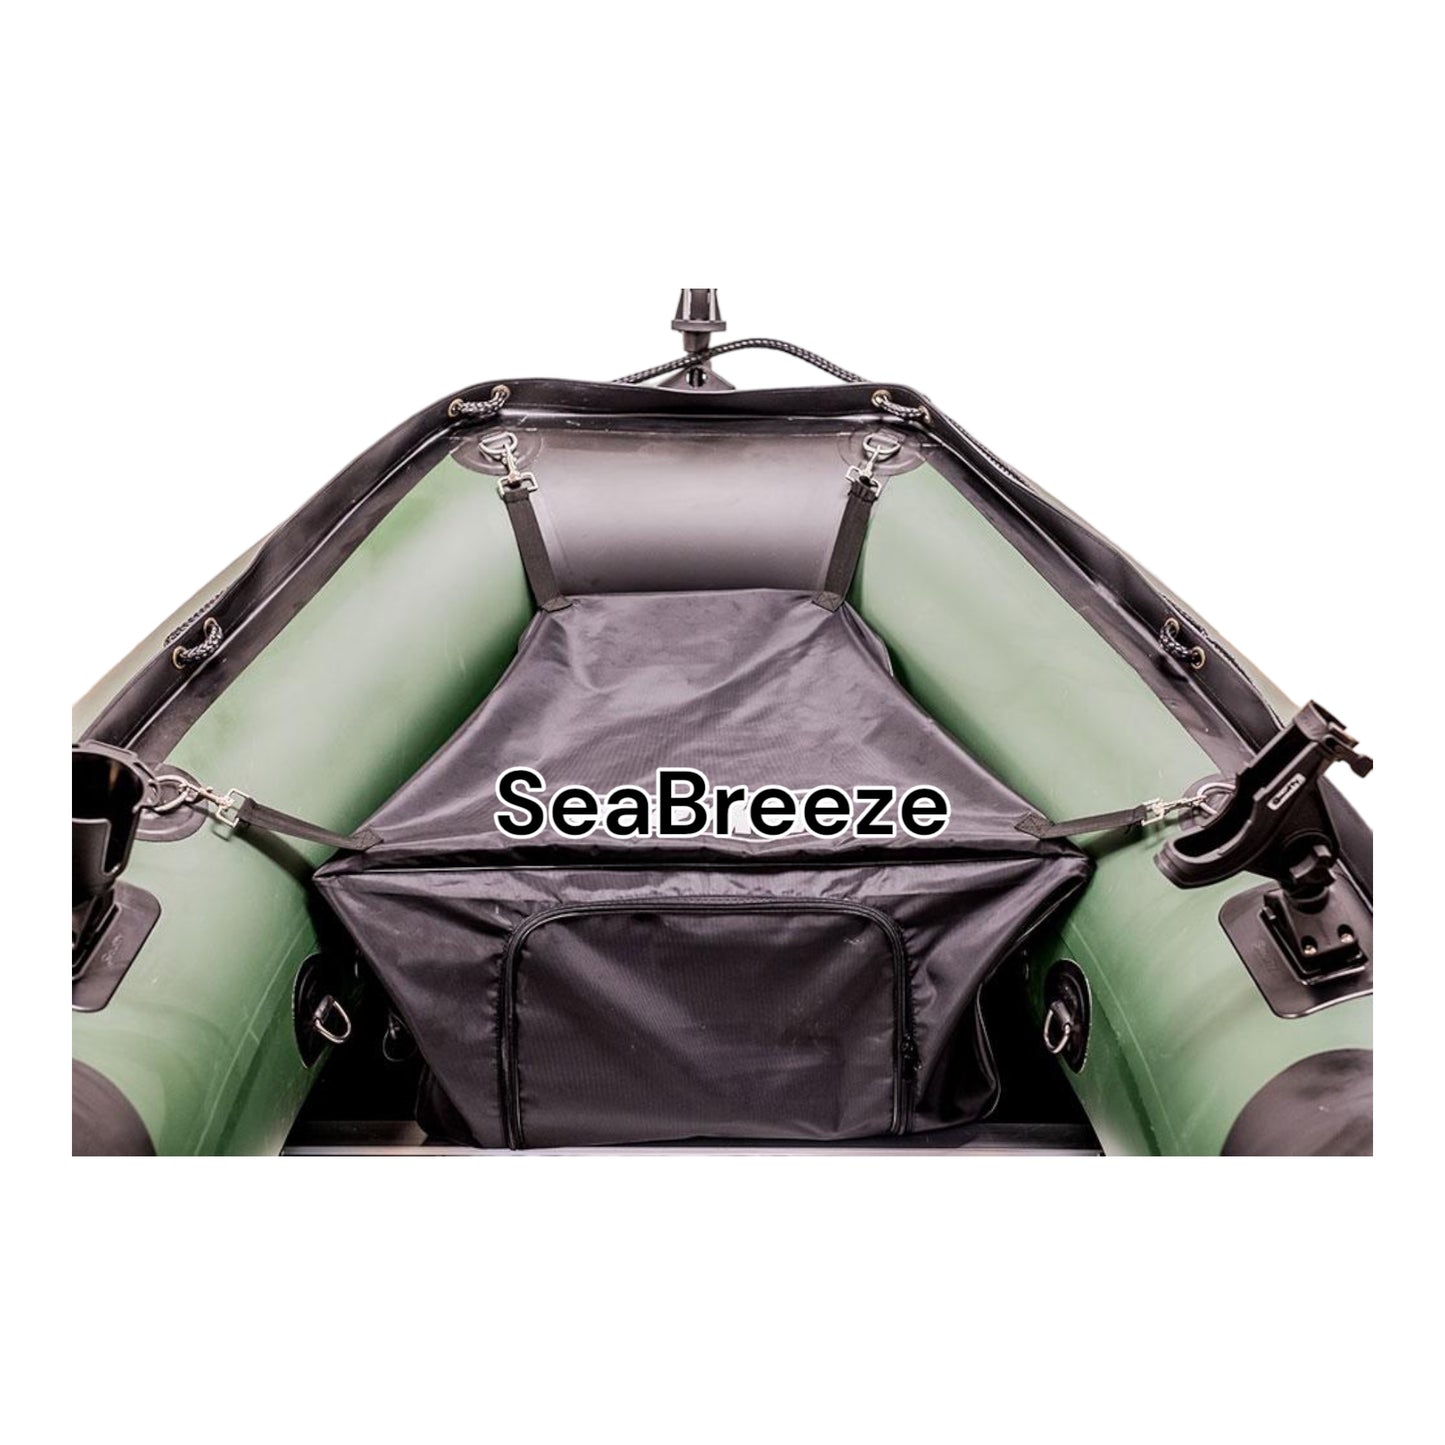 Front bag RIB/Inflatable boat